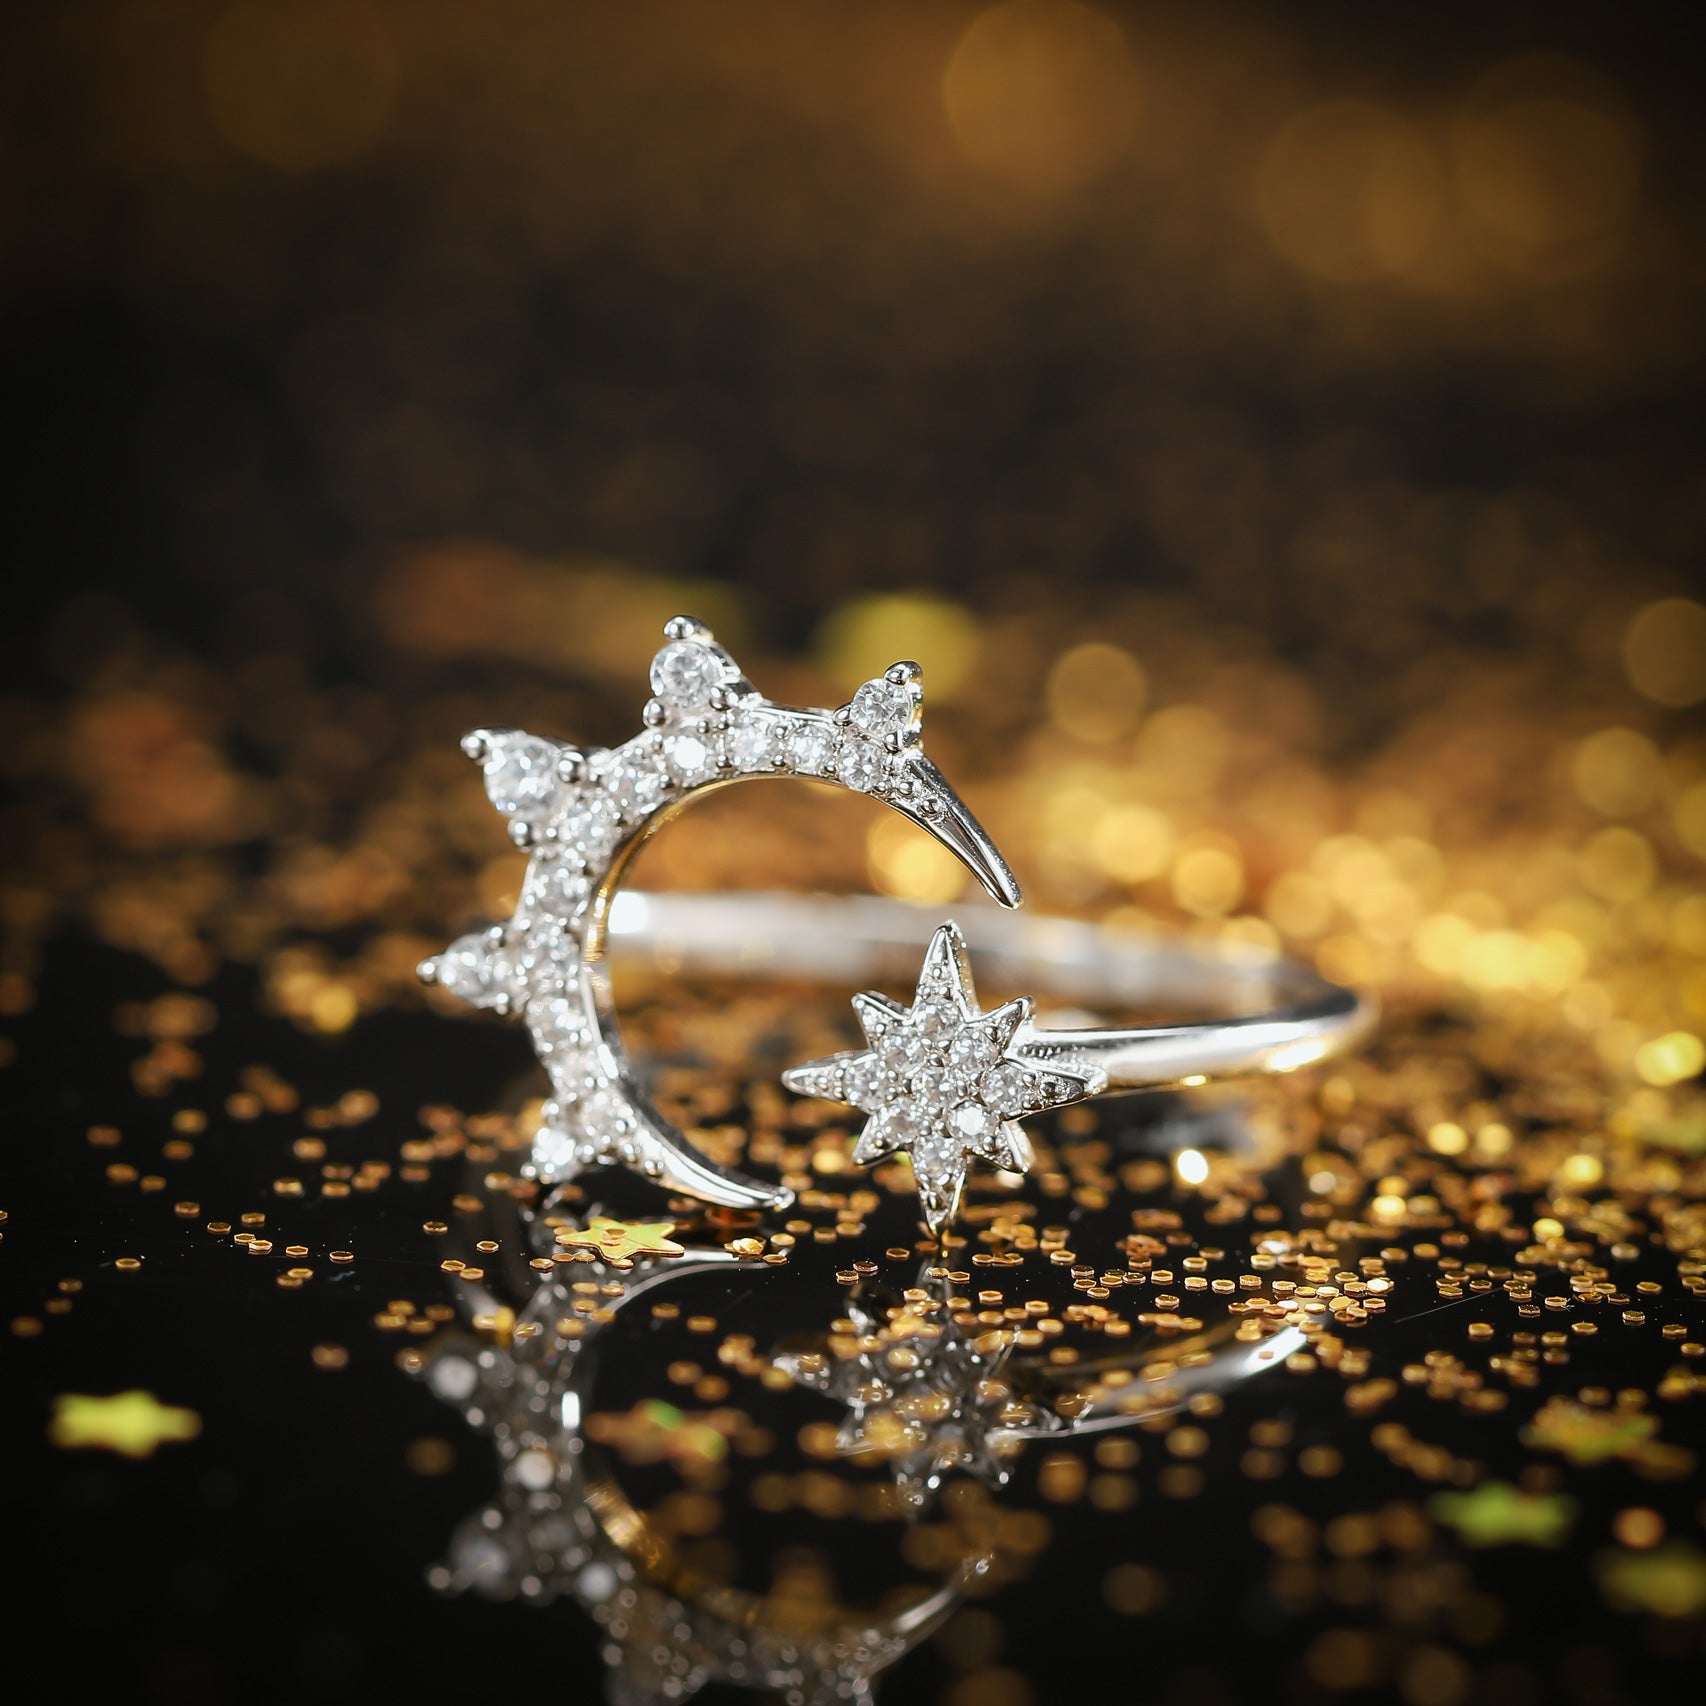 Eight-pointed Star & Moon Diamond Ring